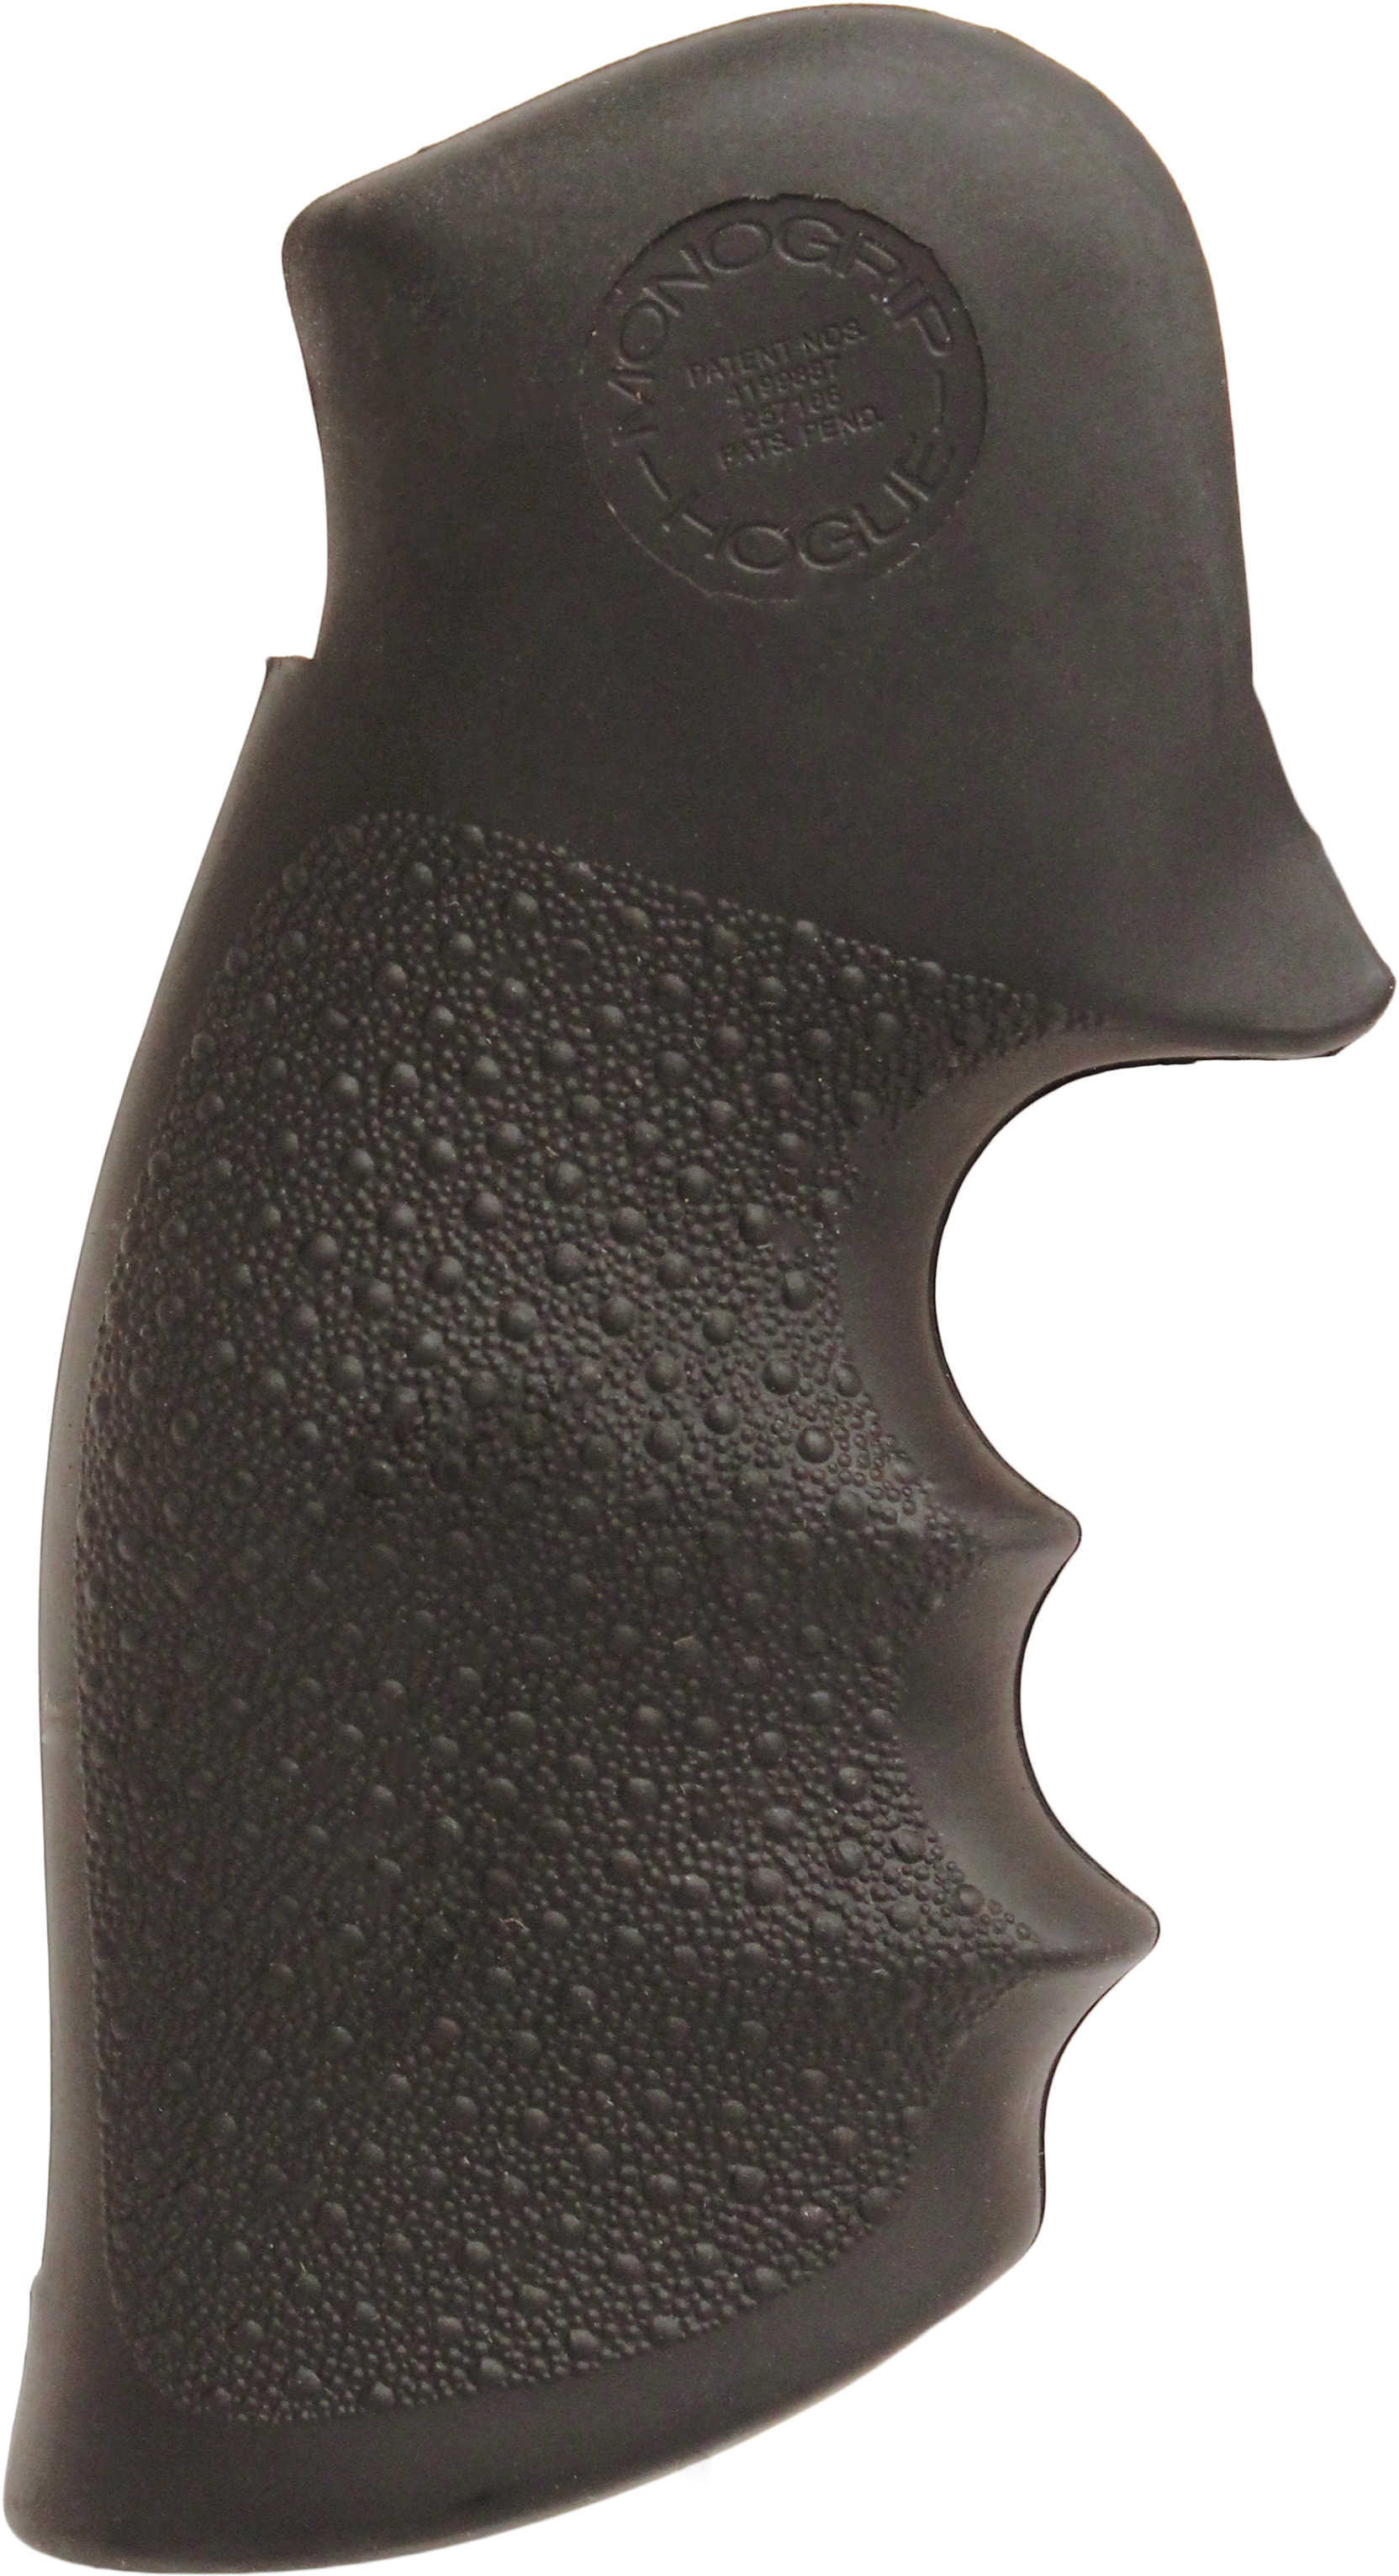 Hogue Monogrip Rubber Grip Black Taurus Medium/Large Model: 66000